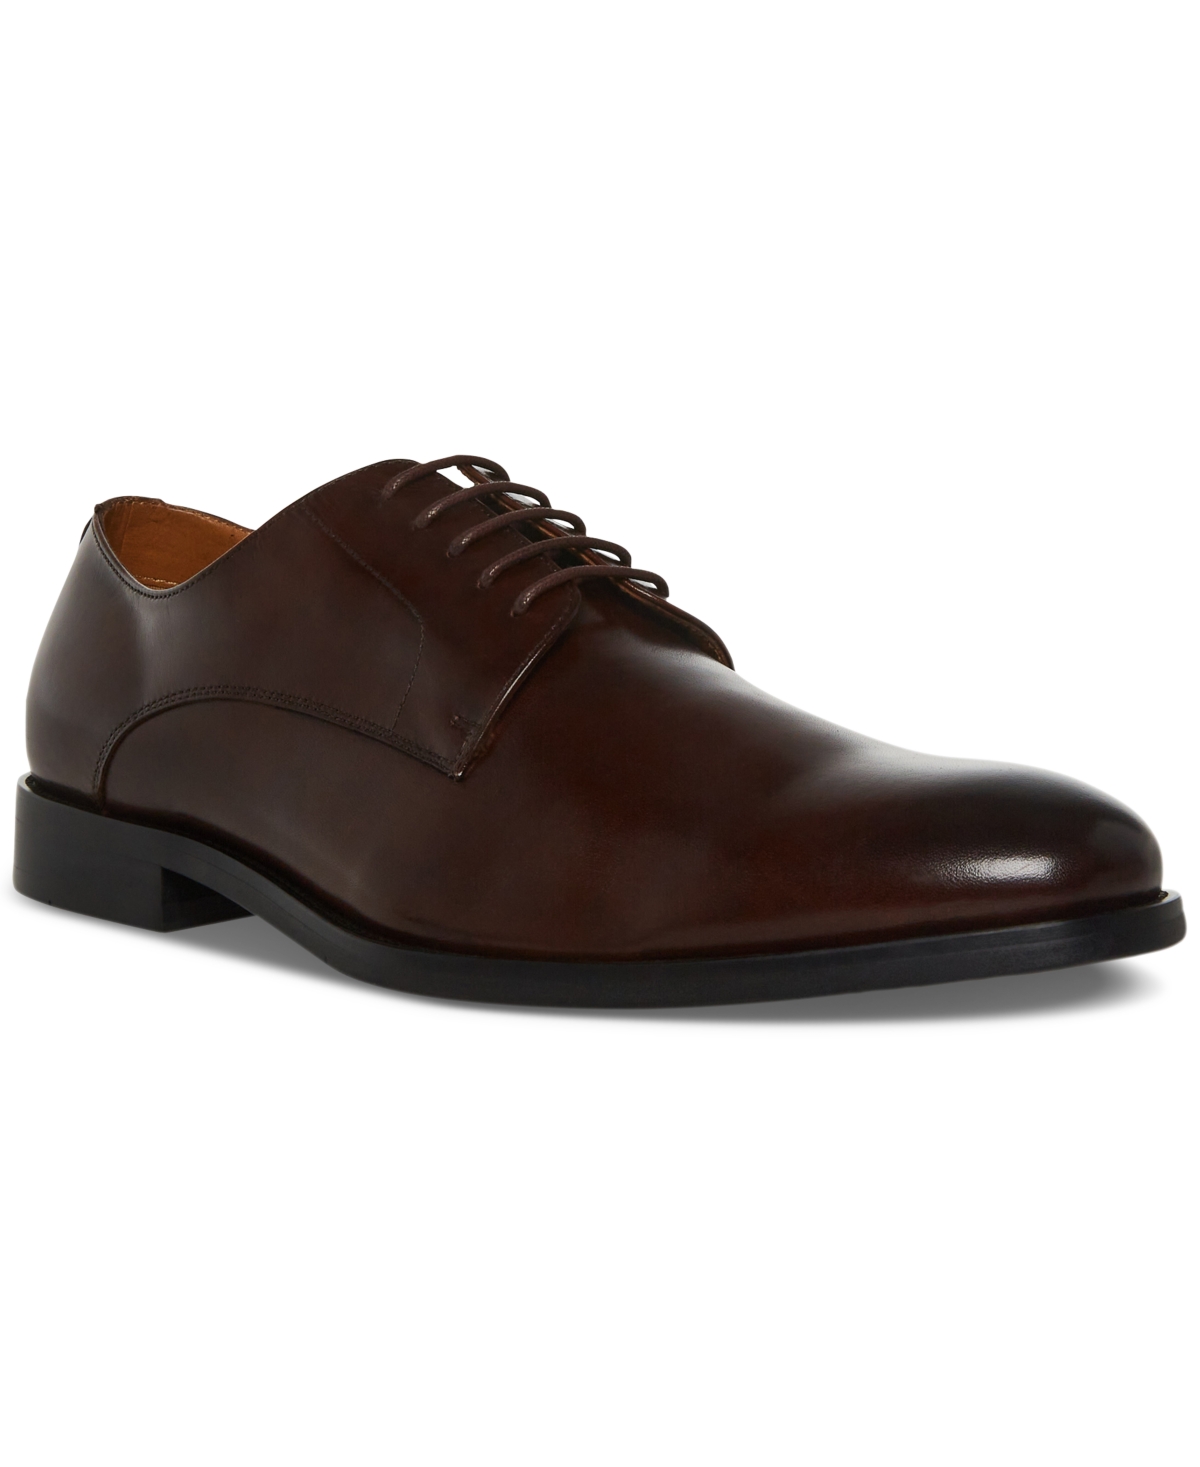 Men's Daxton Derby Dress Shoes - Brown